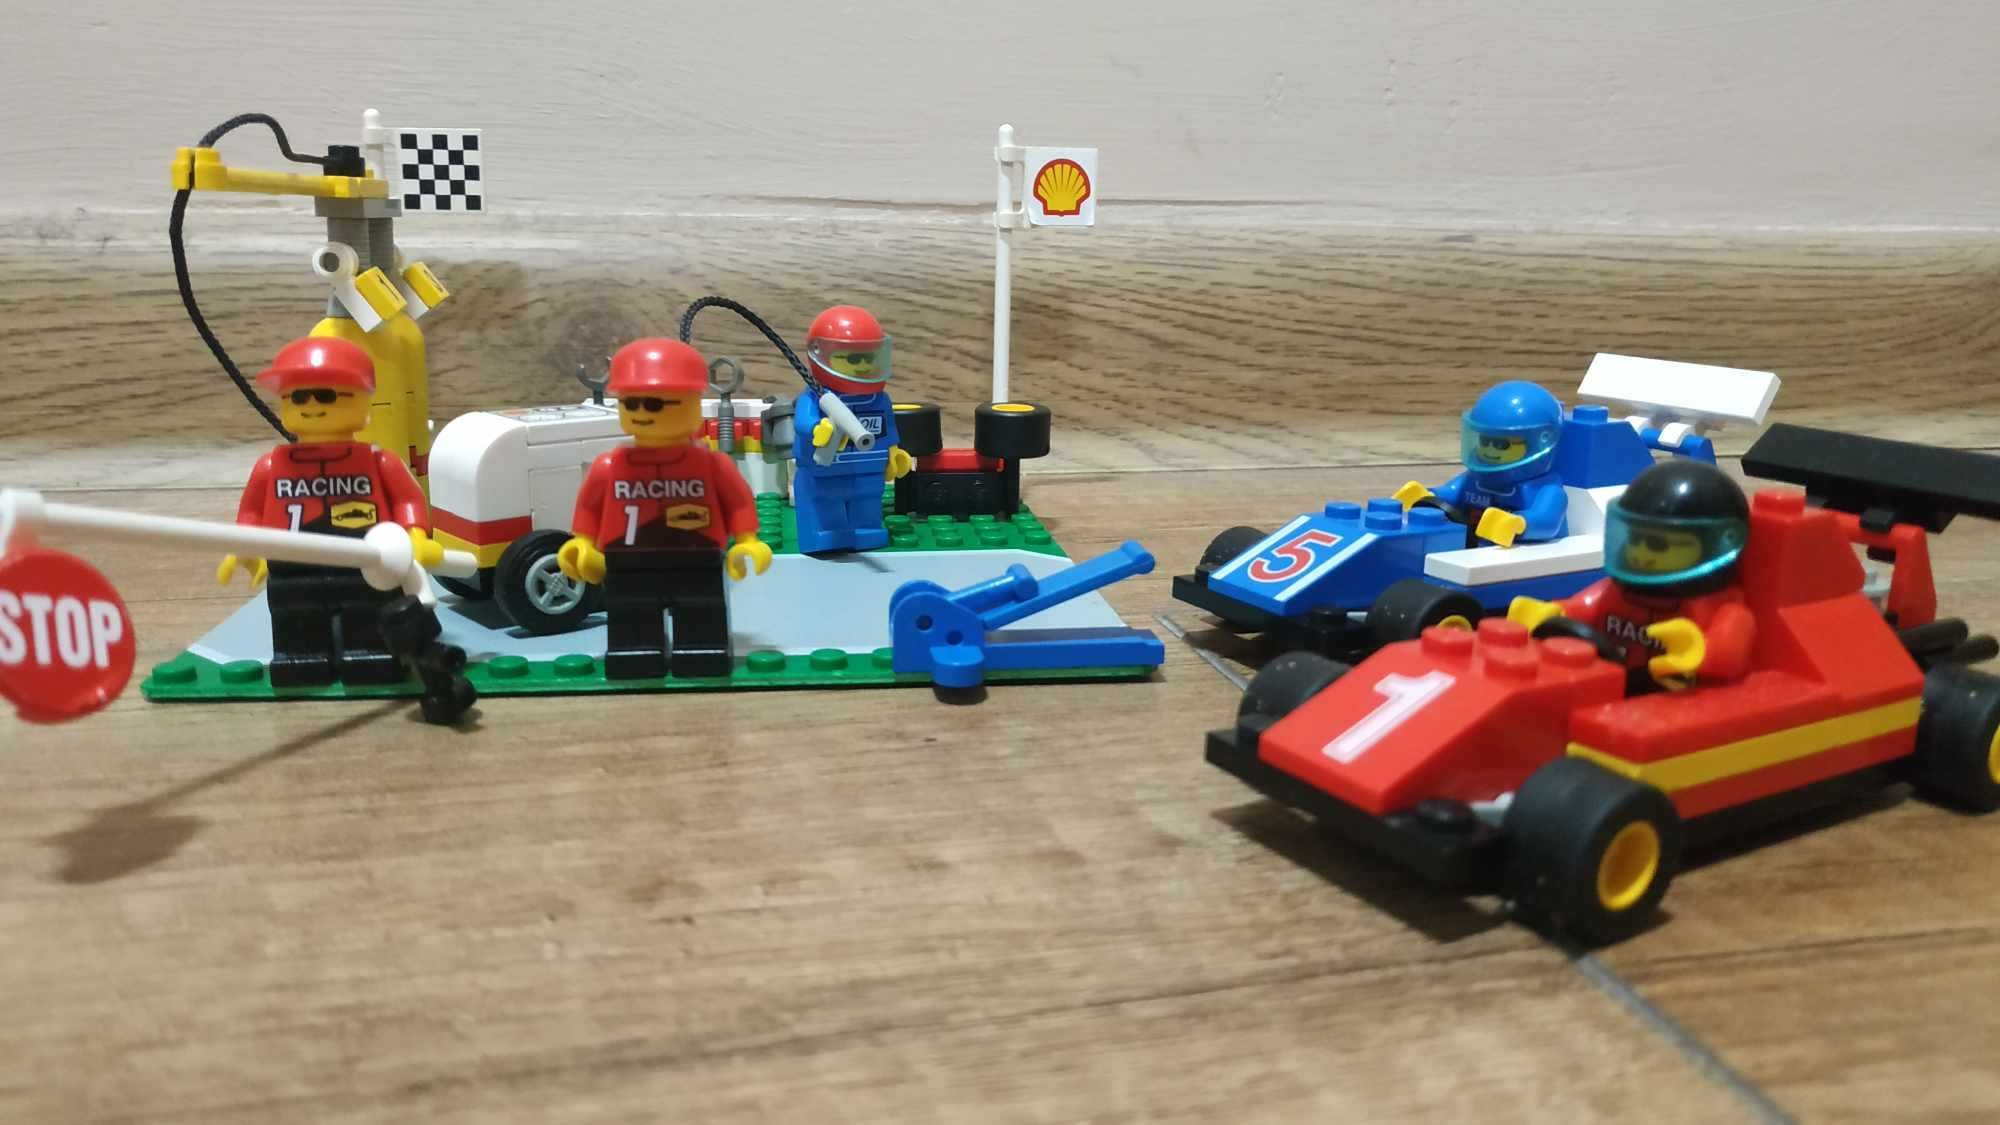 Lego Town 2554 ,,Formula 1 Pit Stop"